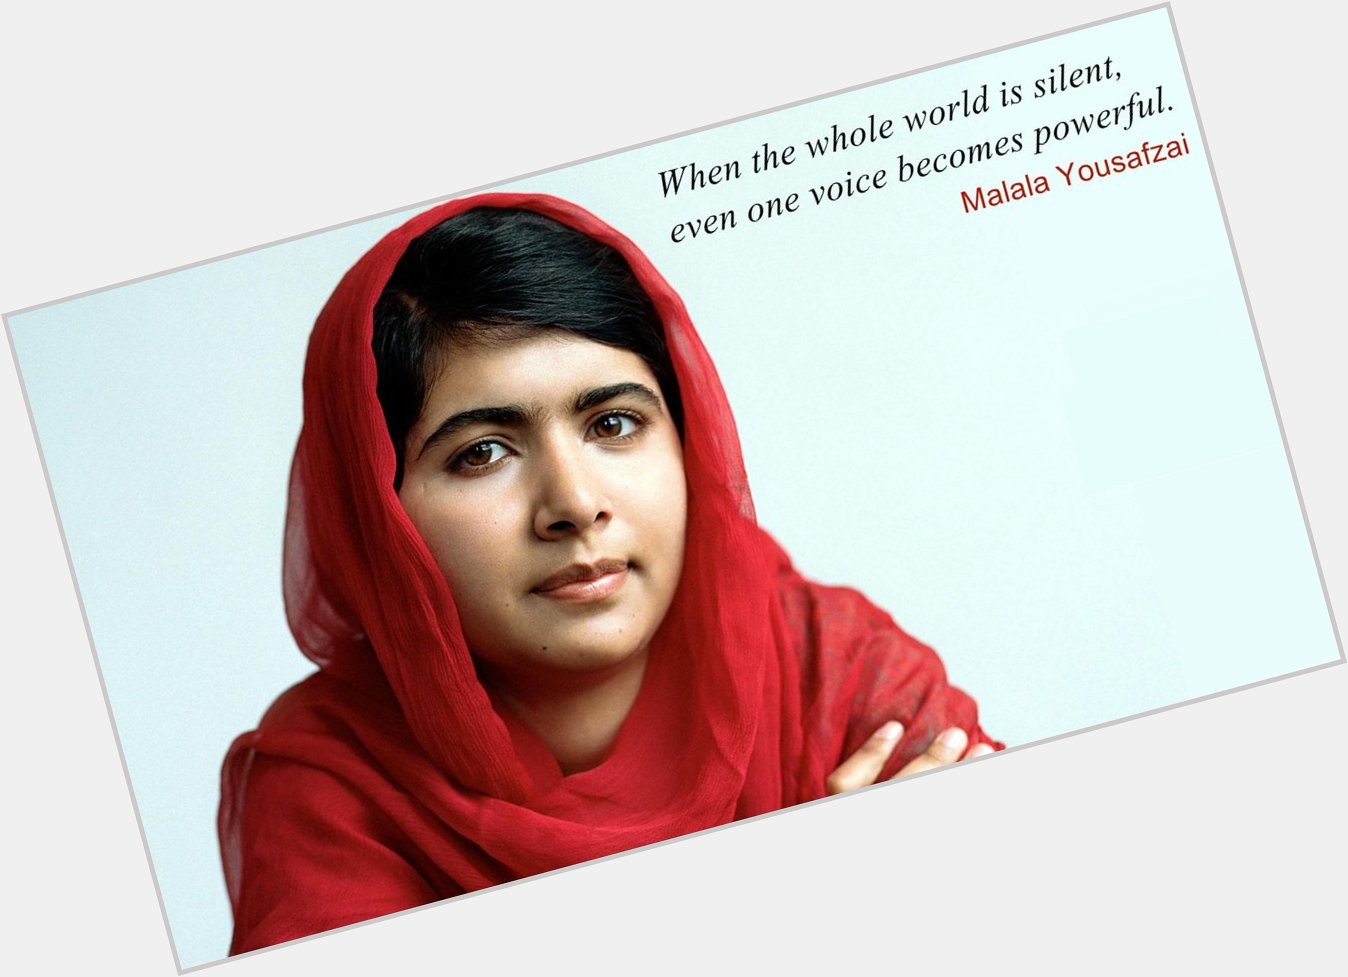 One voice can change the world...
Happy Birthday Malala Yousafzai! 